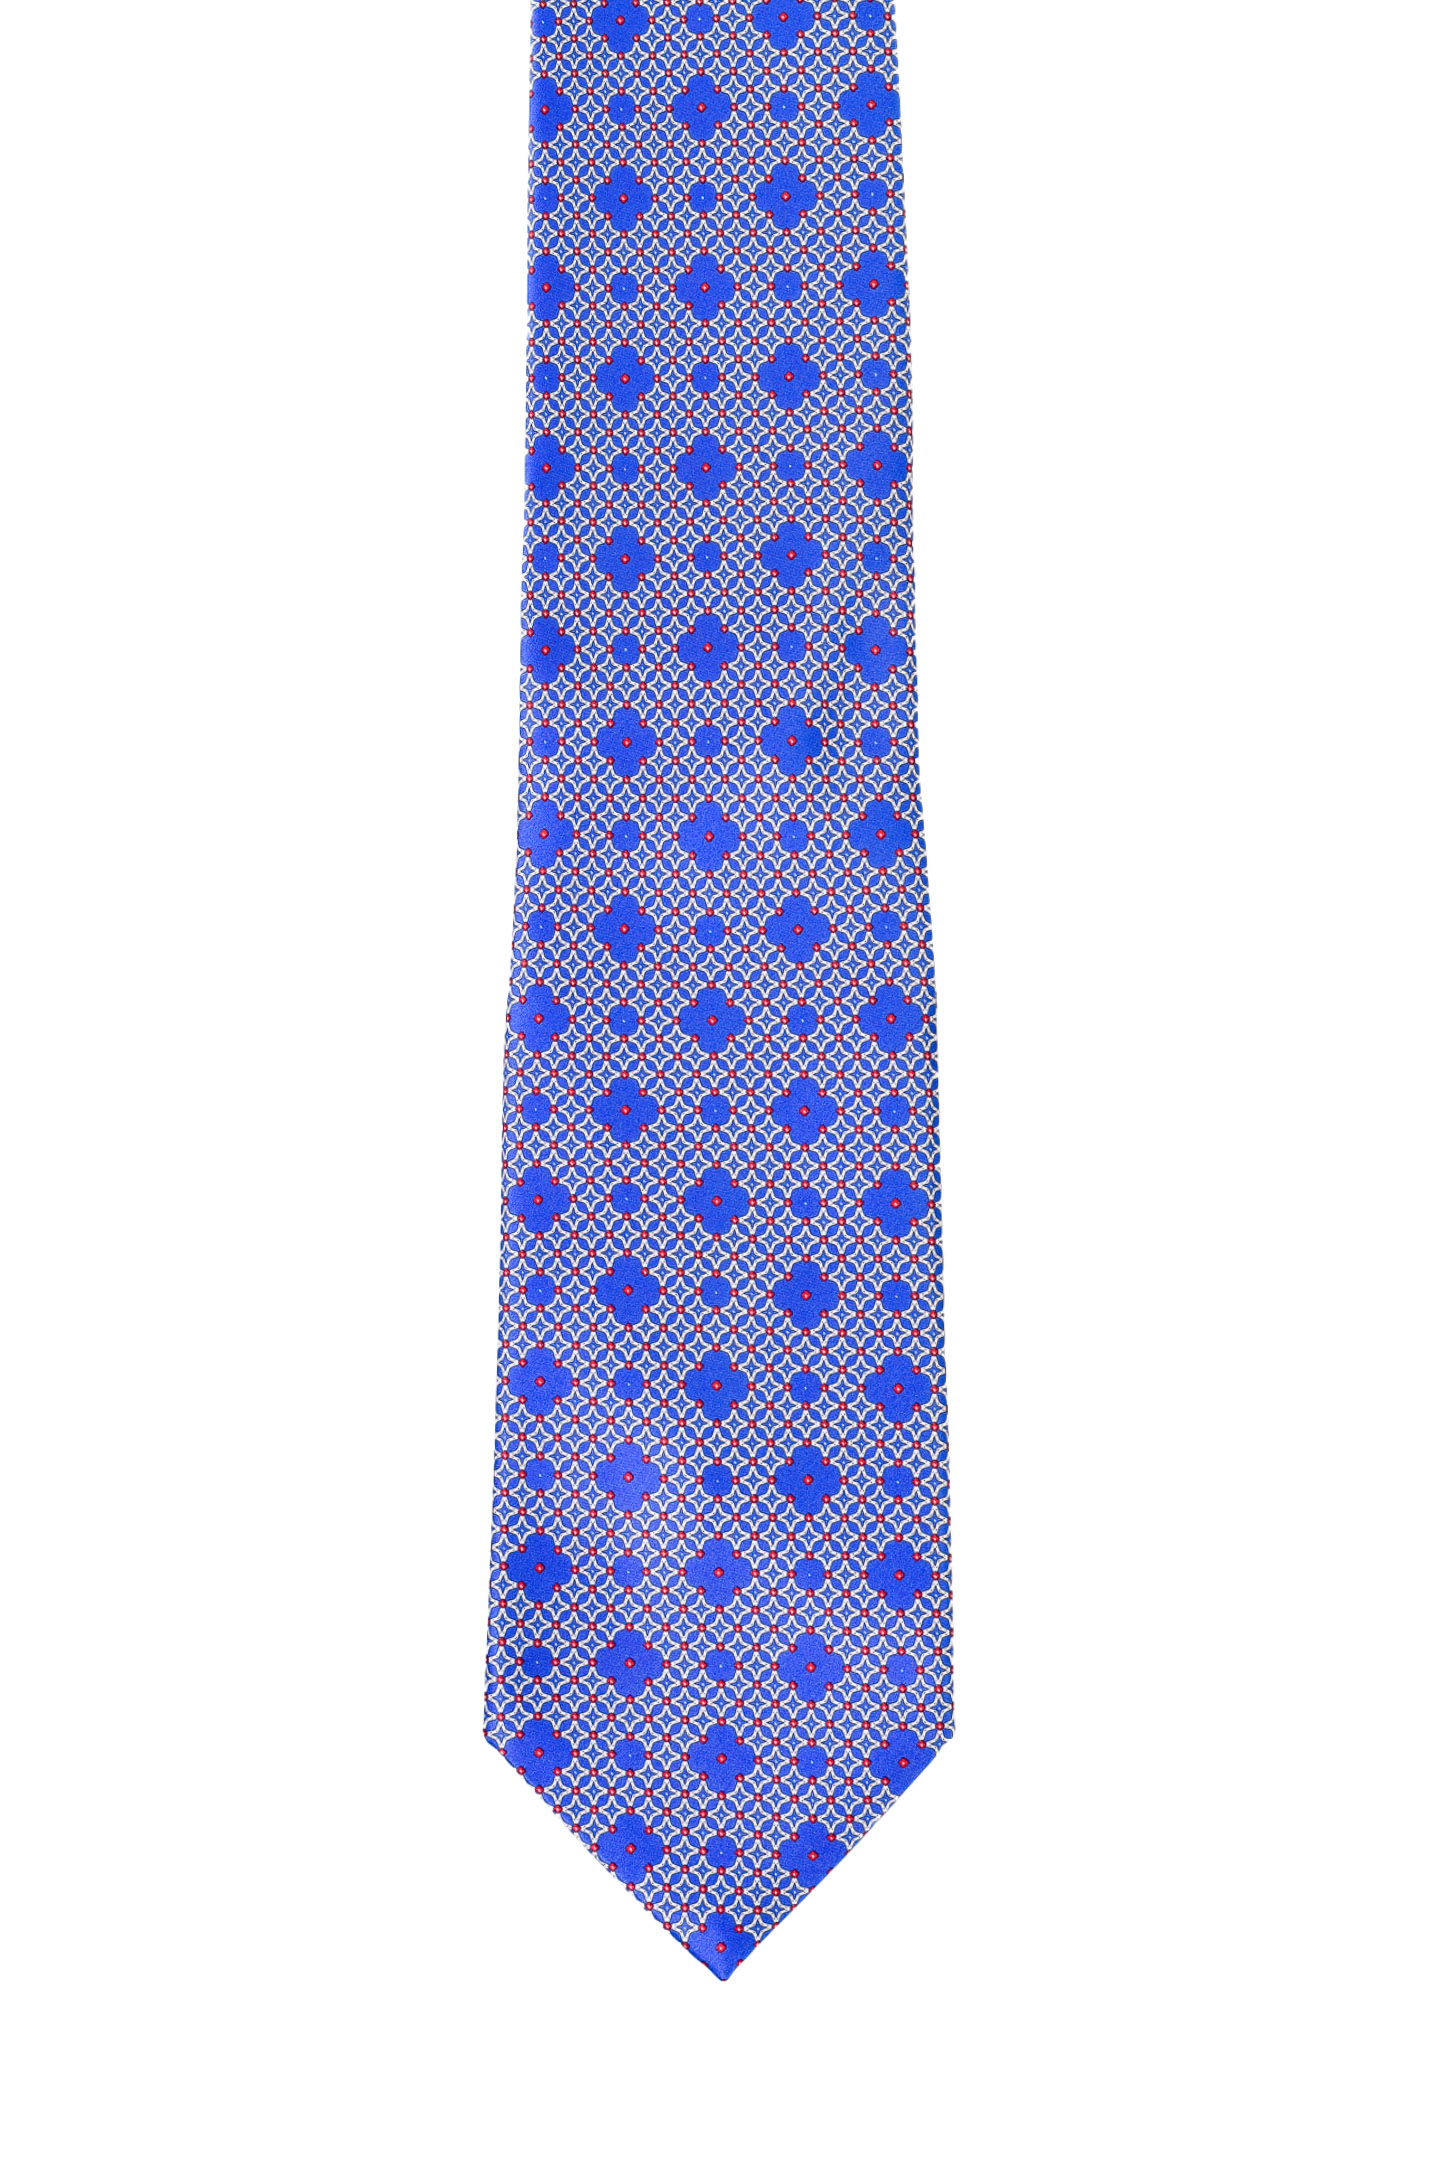 Галстук и платок STEFANO RICCI DH 31038 003, цвет: Голубой, Мужской